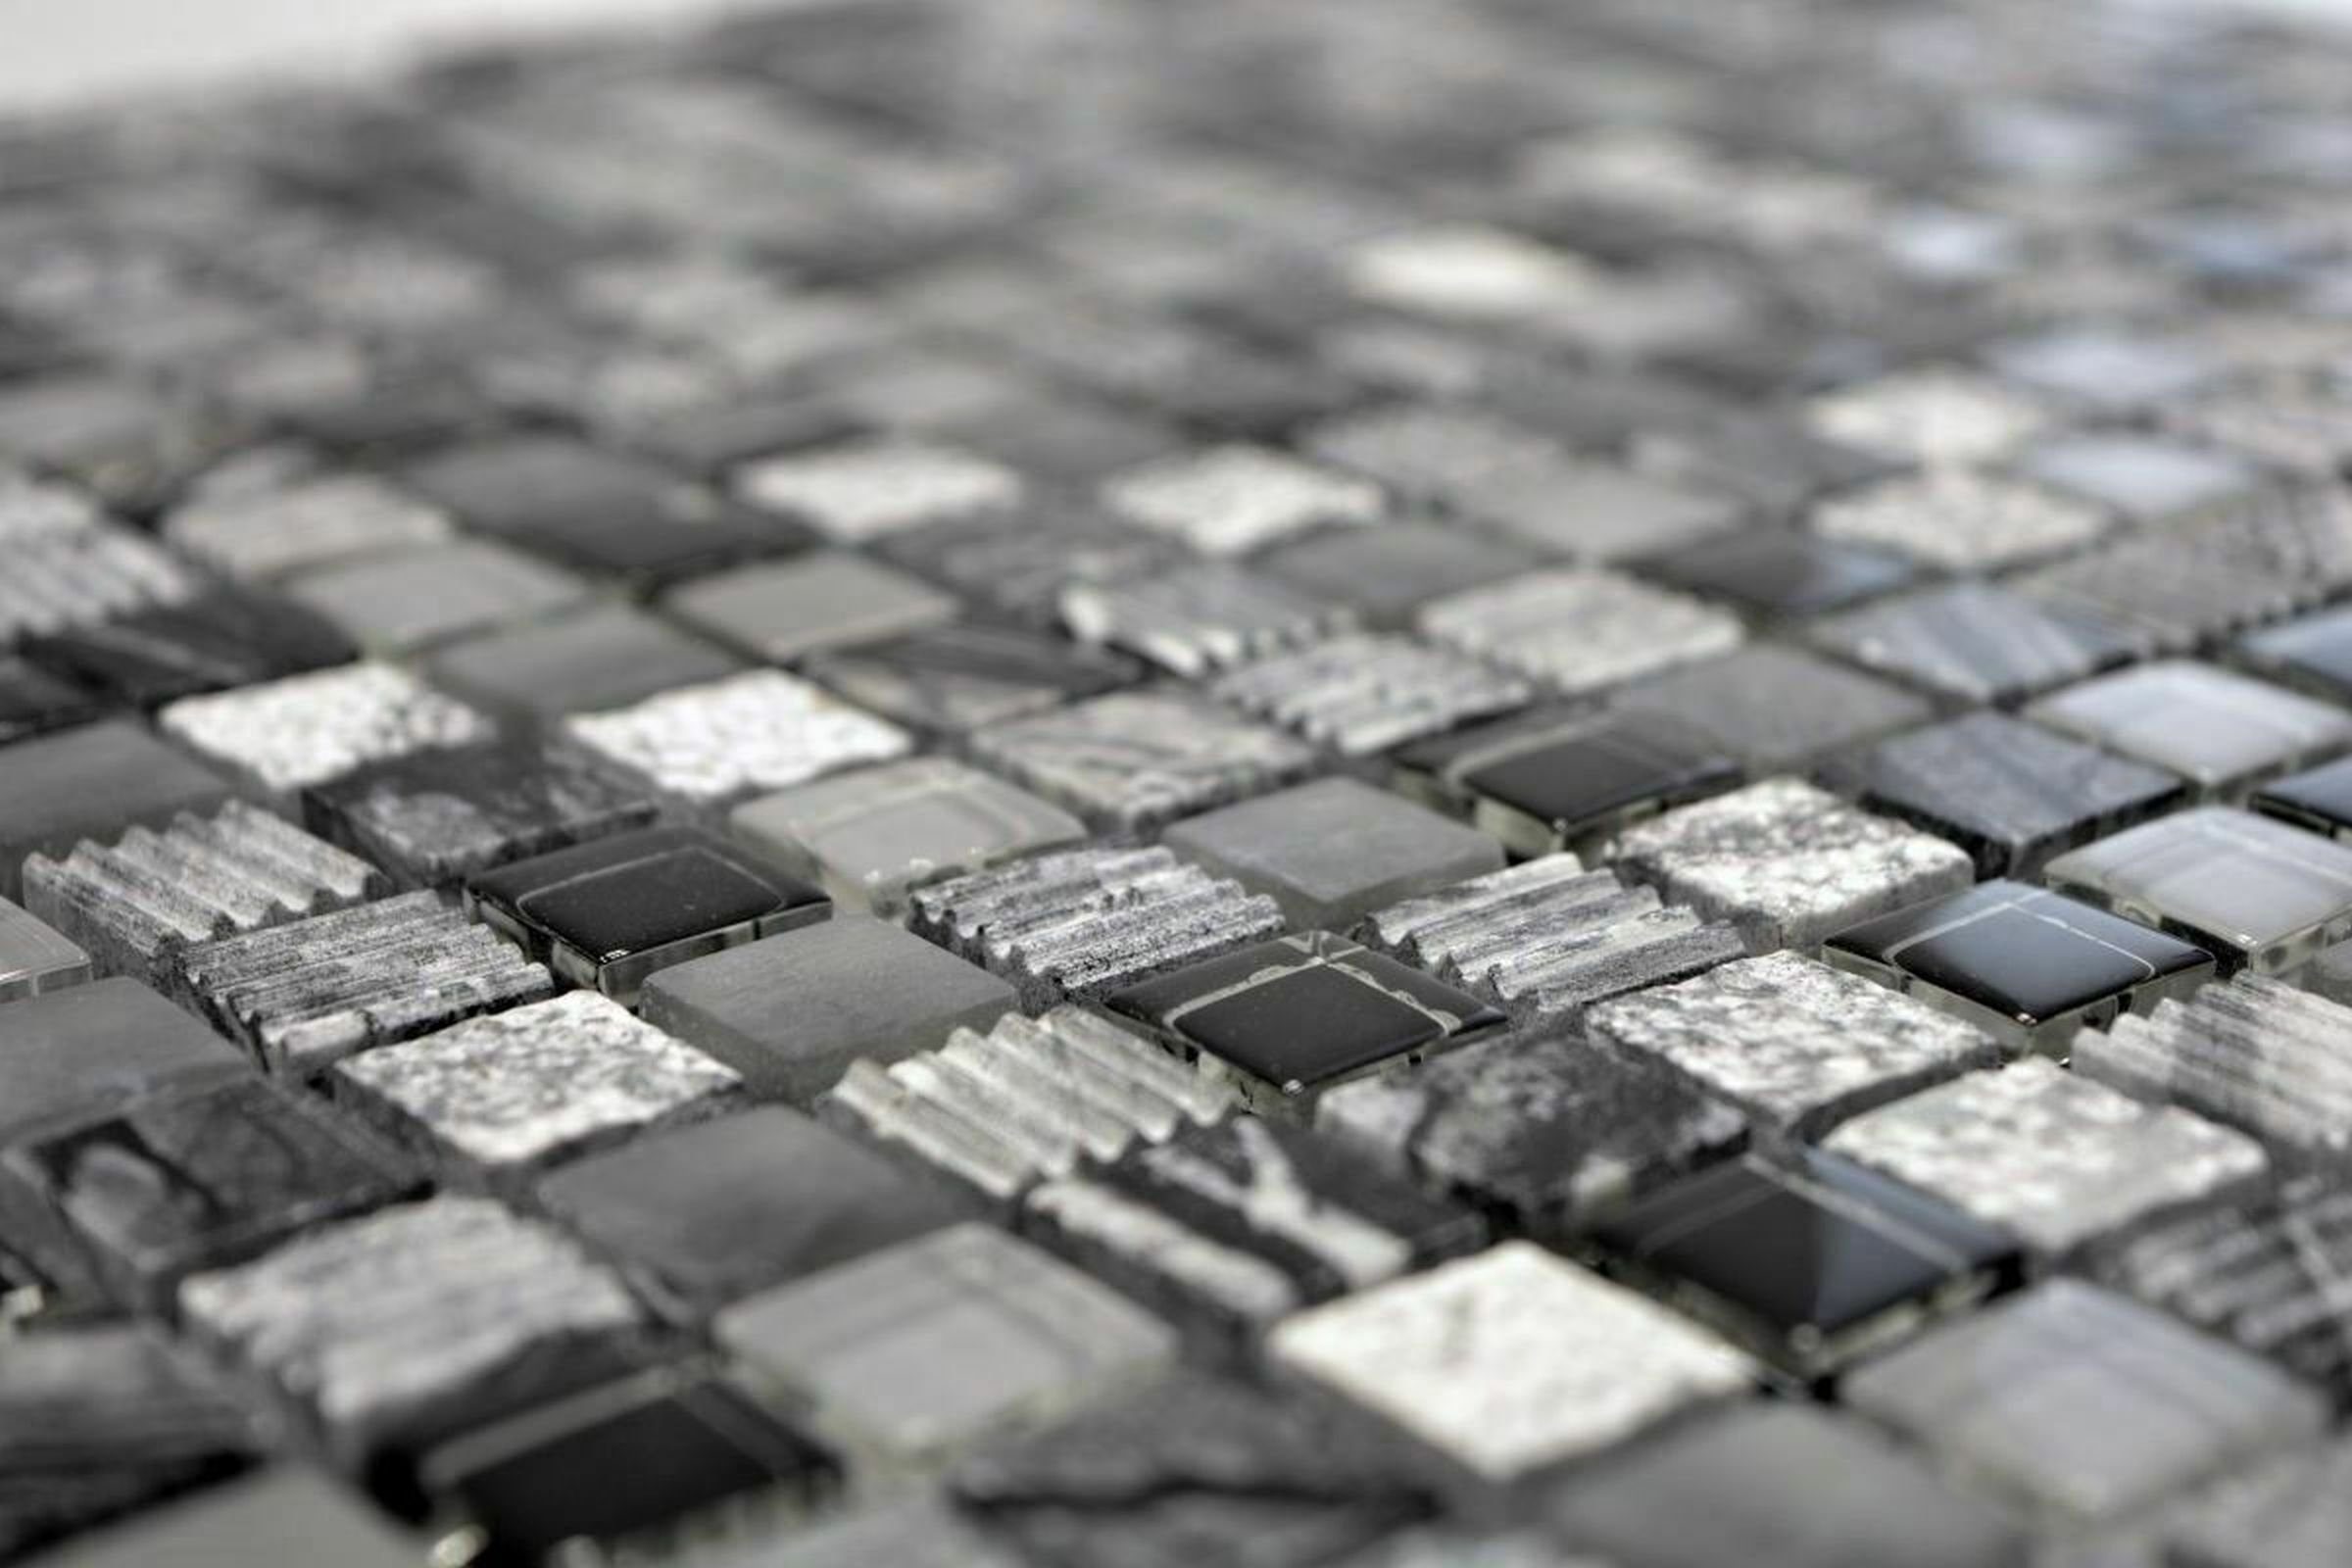 Naturstein Mosani Fliese schwarz Mosaikfliesen grau Mosaikfliese Glasmosaik